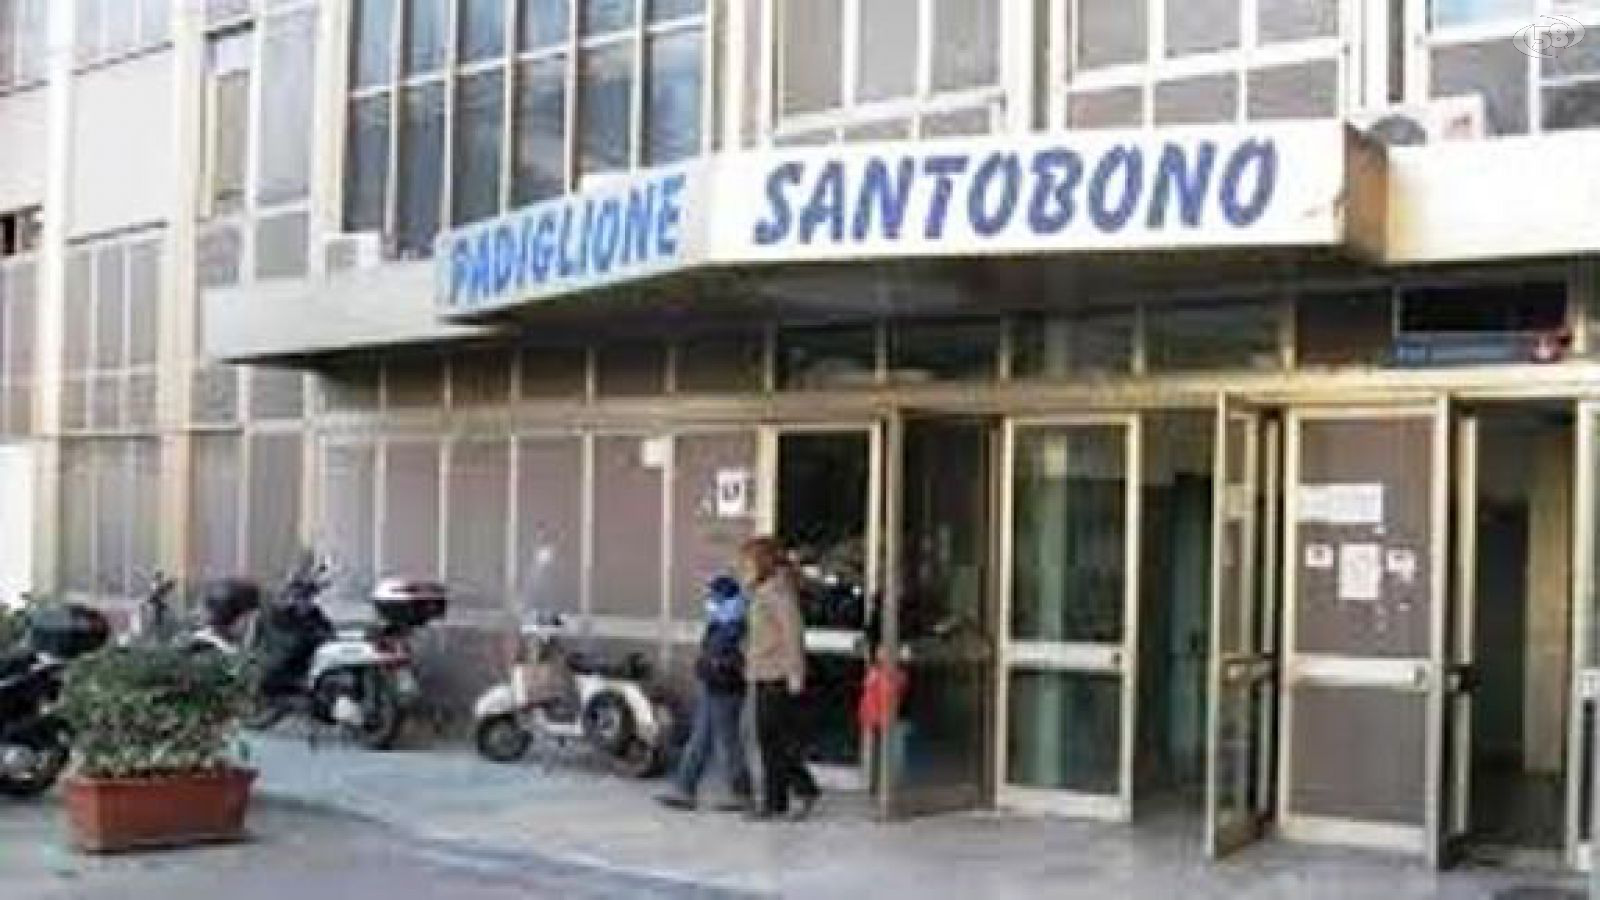 ospedale santobono